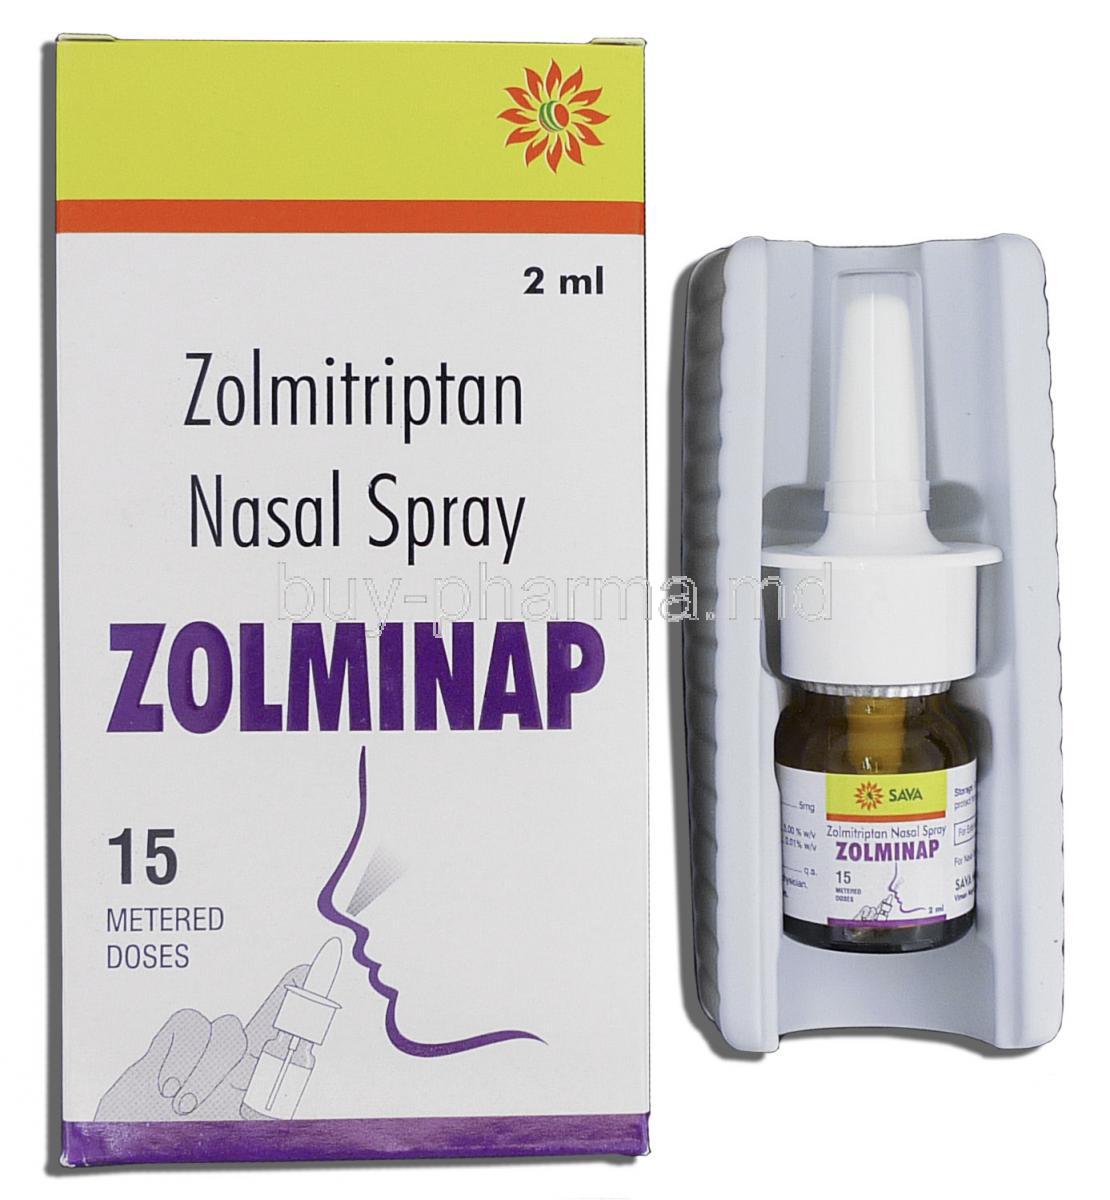 Zolminap Nasal Spray, Zolmitriptan  2ml 5mg, Box and Spray